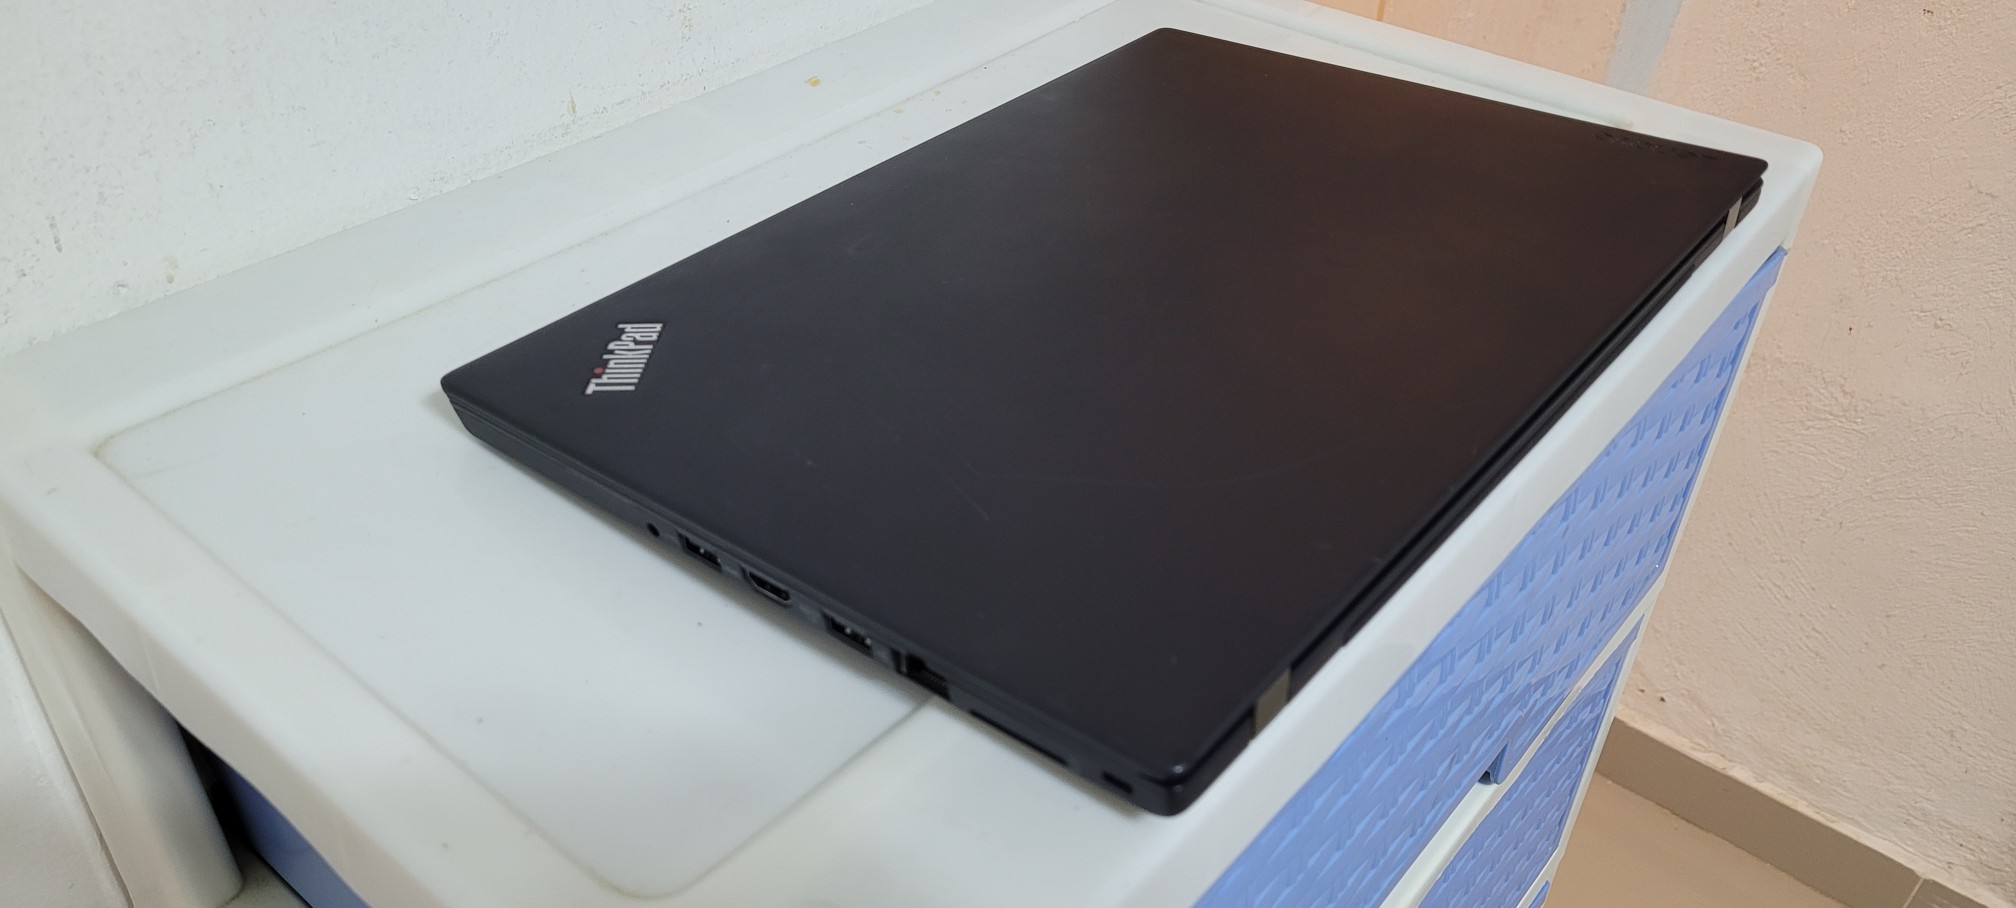 computadoras y laptops - Lenovo Slim 14 Pulg Core i7 Ram 8gb Disco 256gb SSD Solido new 2